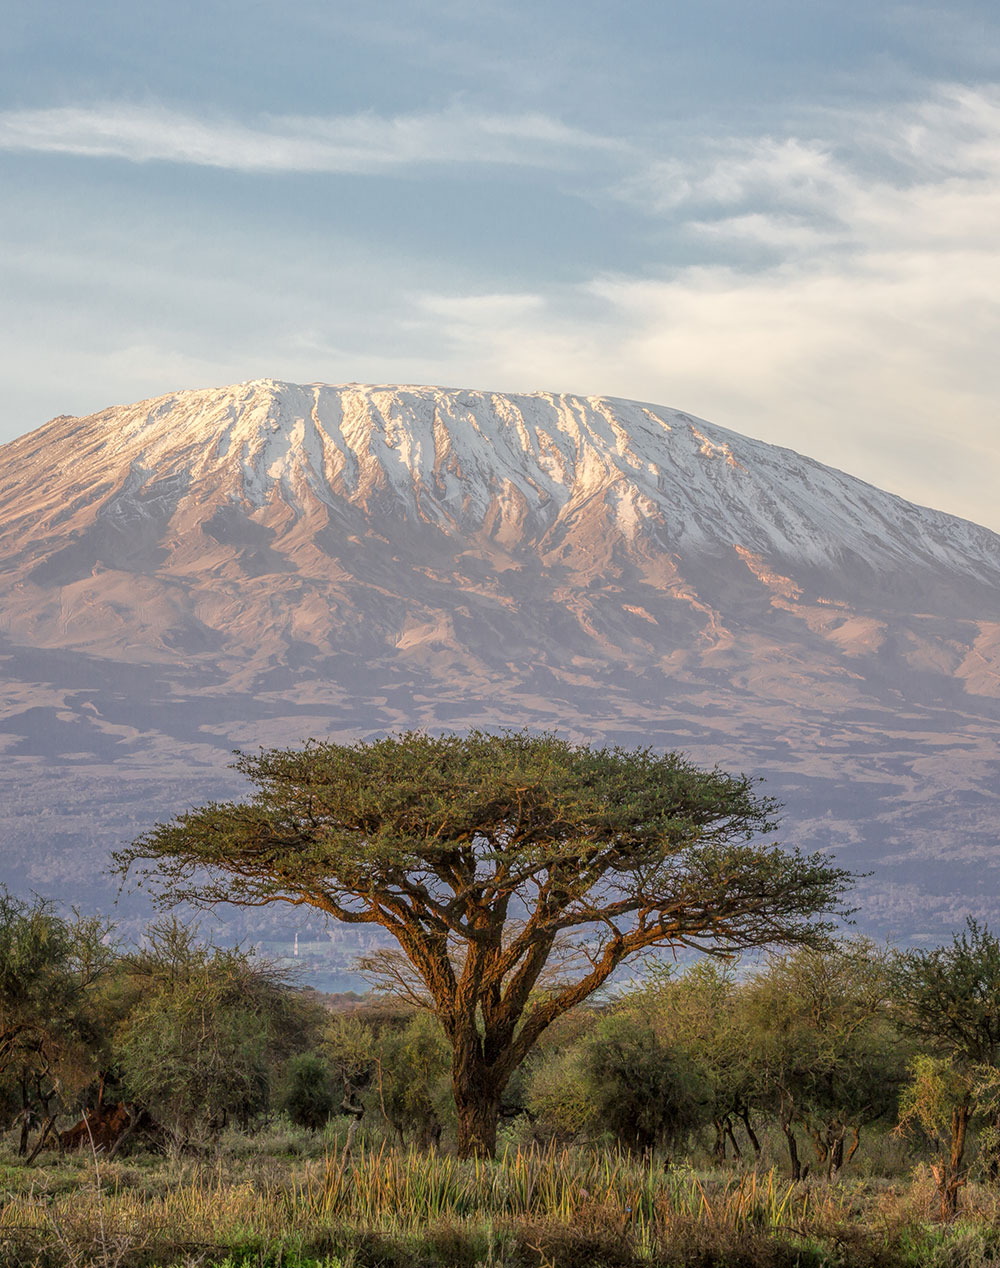 Acacia Tree in front of Kilimanjaro